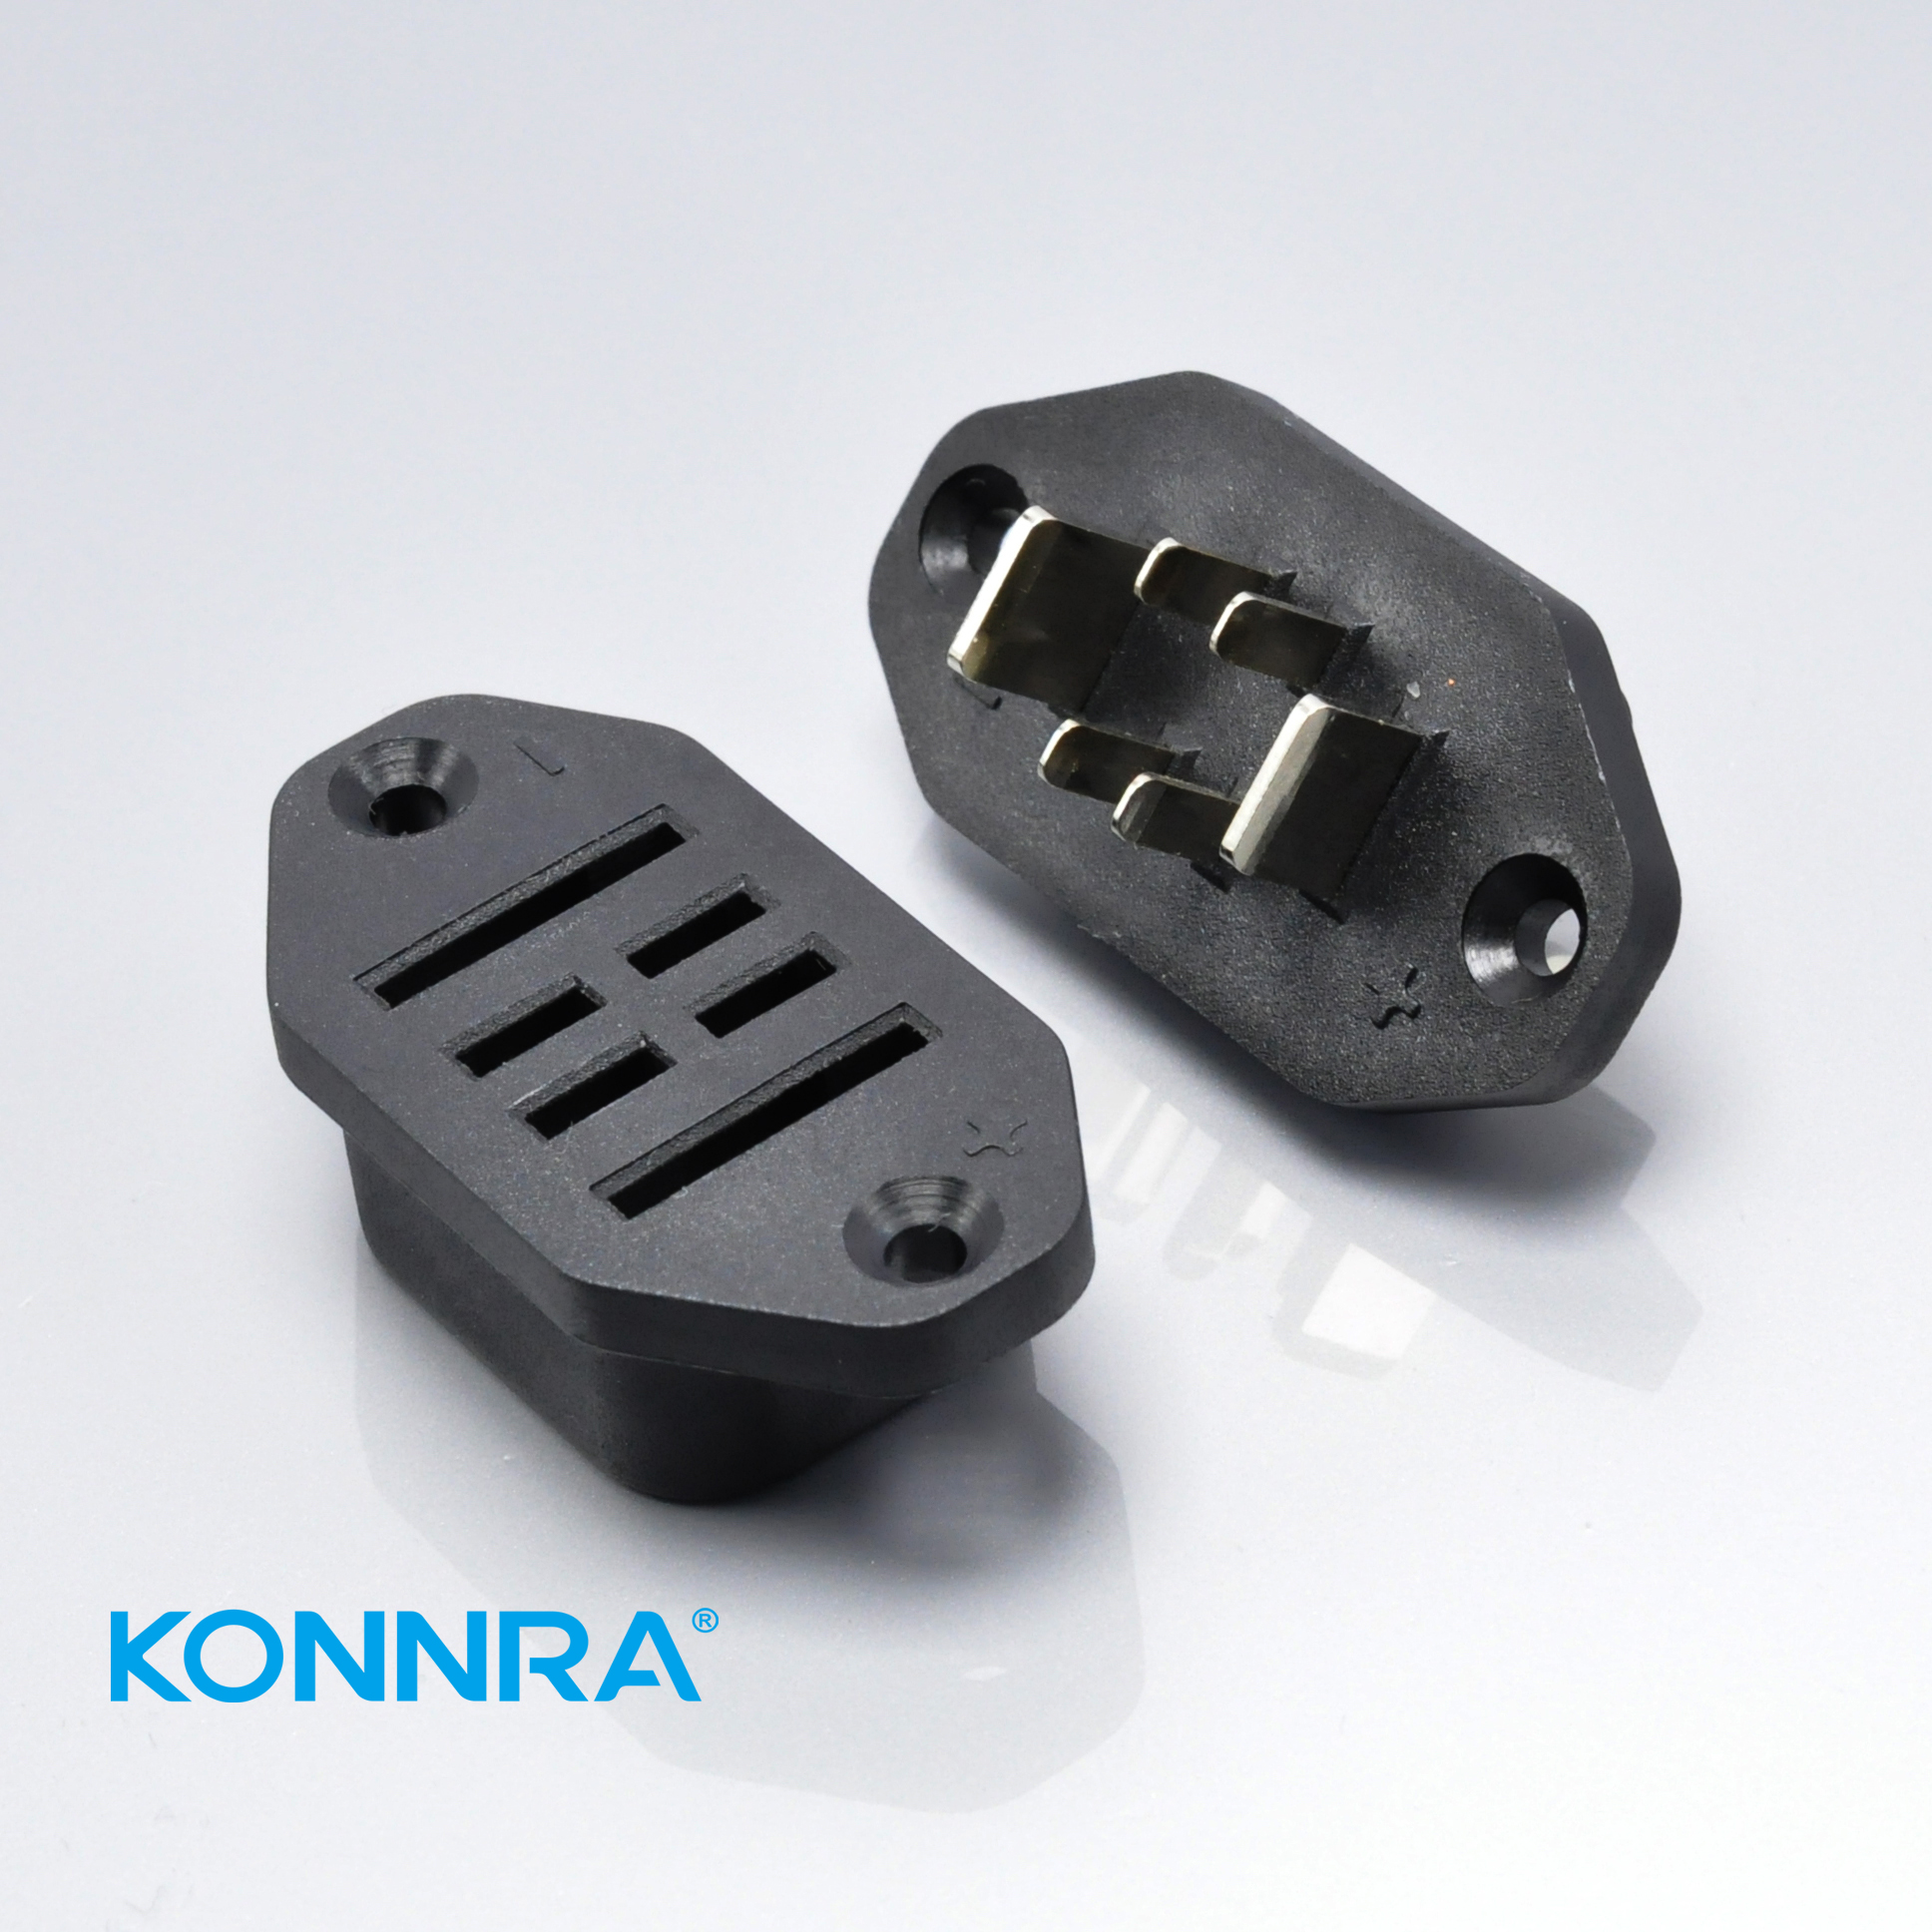 Konnra ebike charging and discharging power connectors.jpg